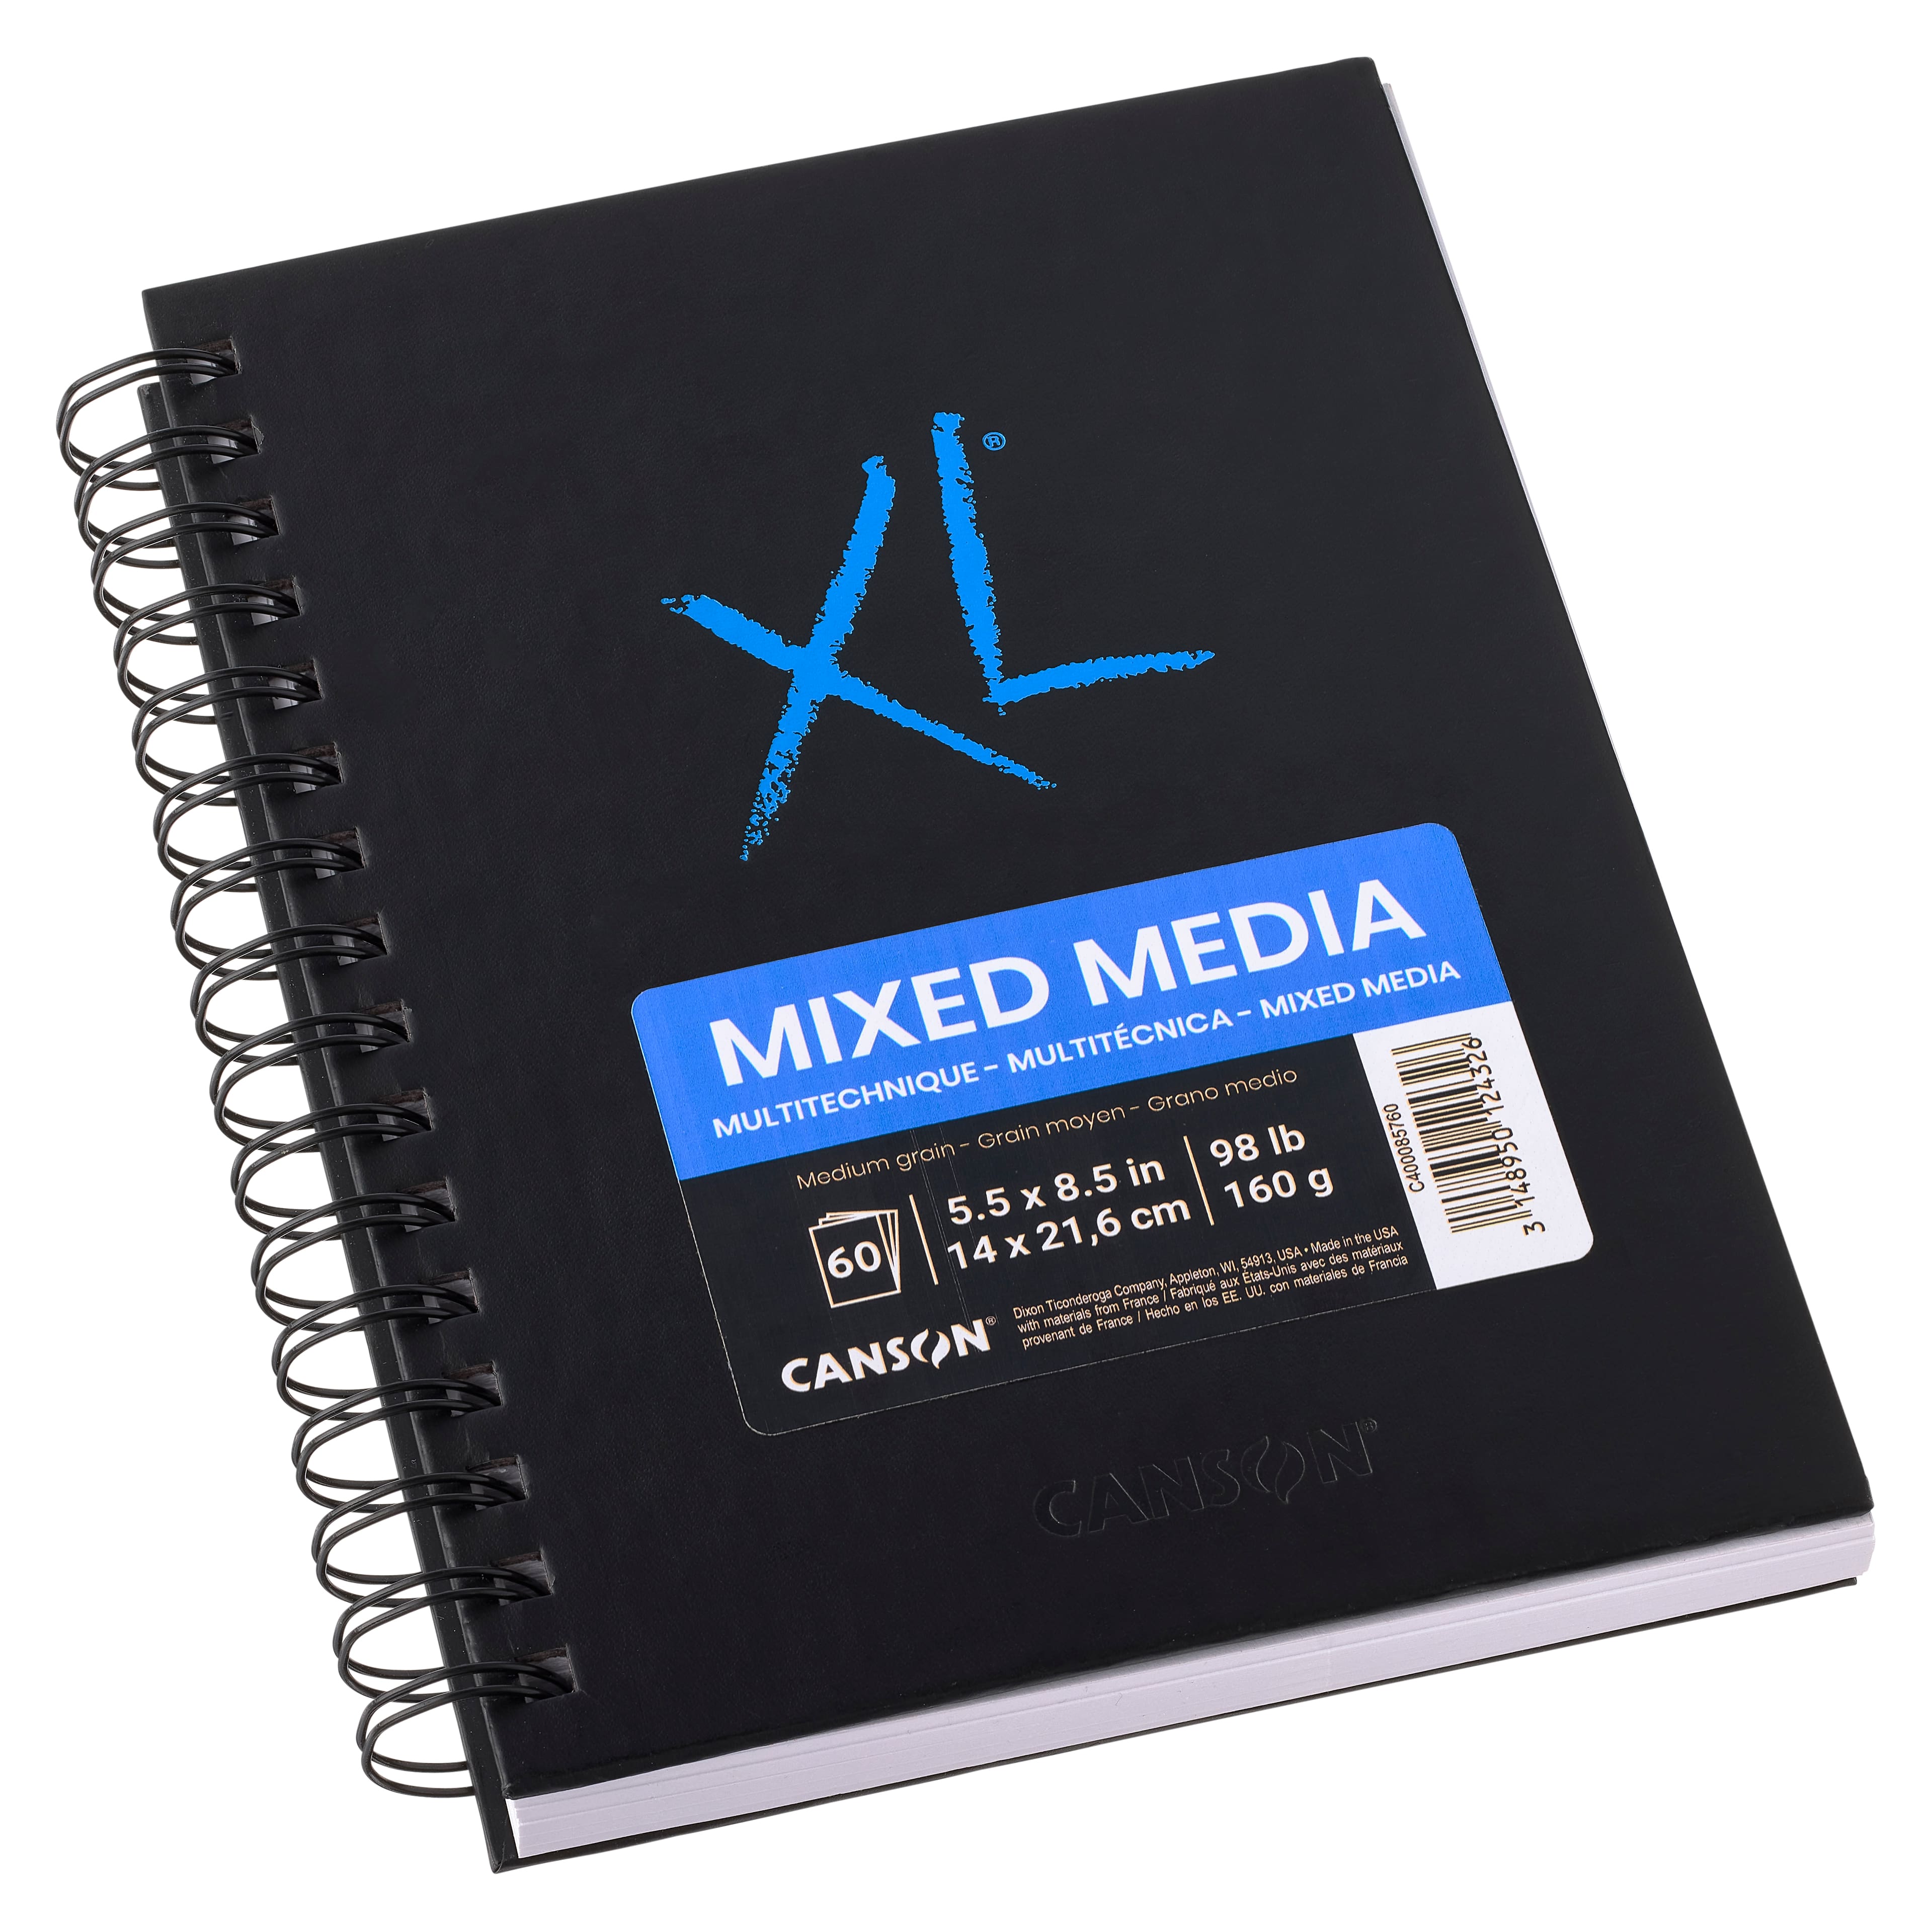 XL® Mixed Media